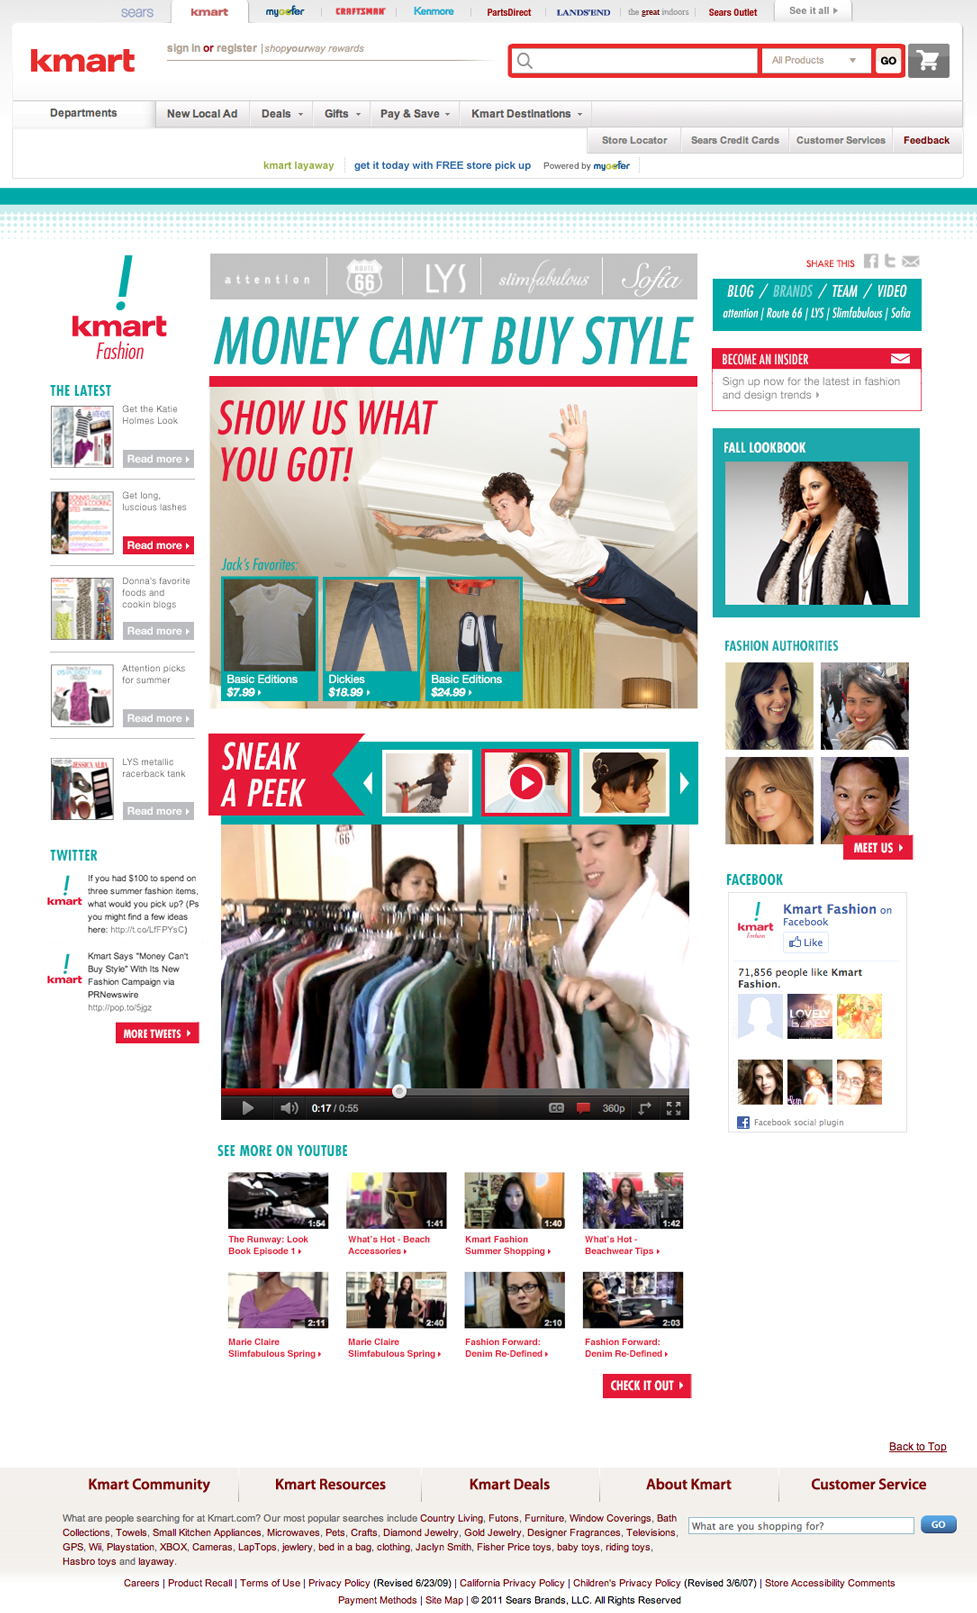 Kmart, Money Can't Buy Style, website